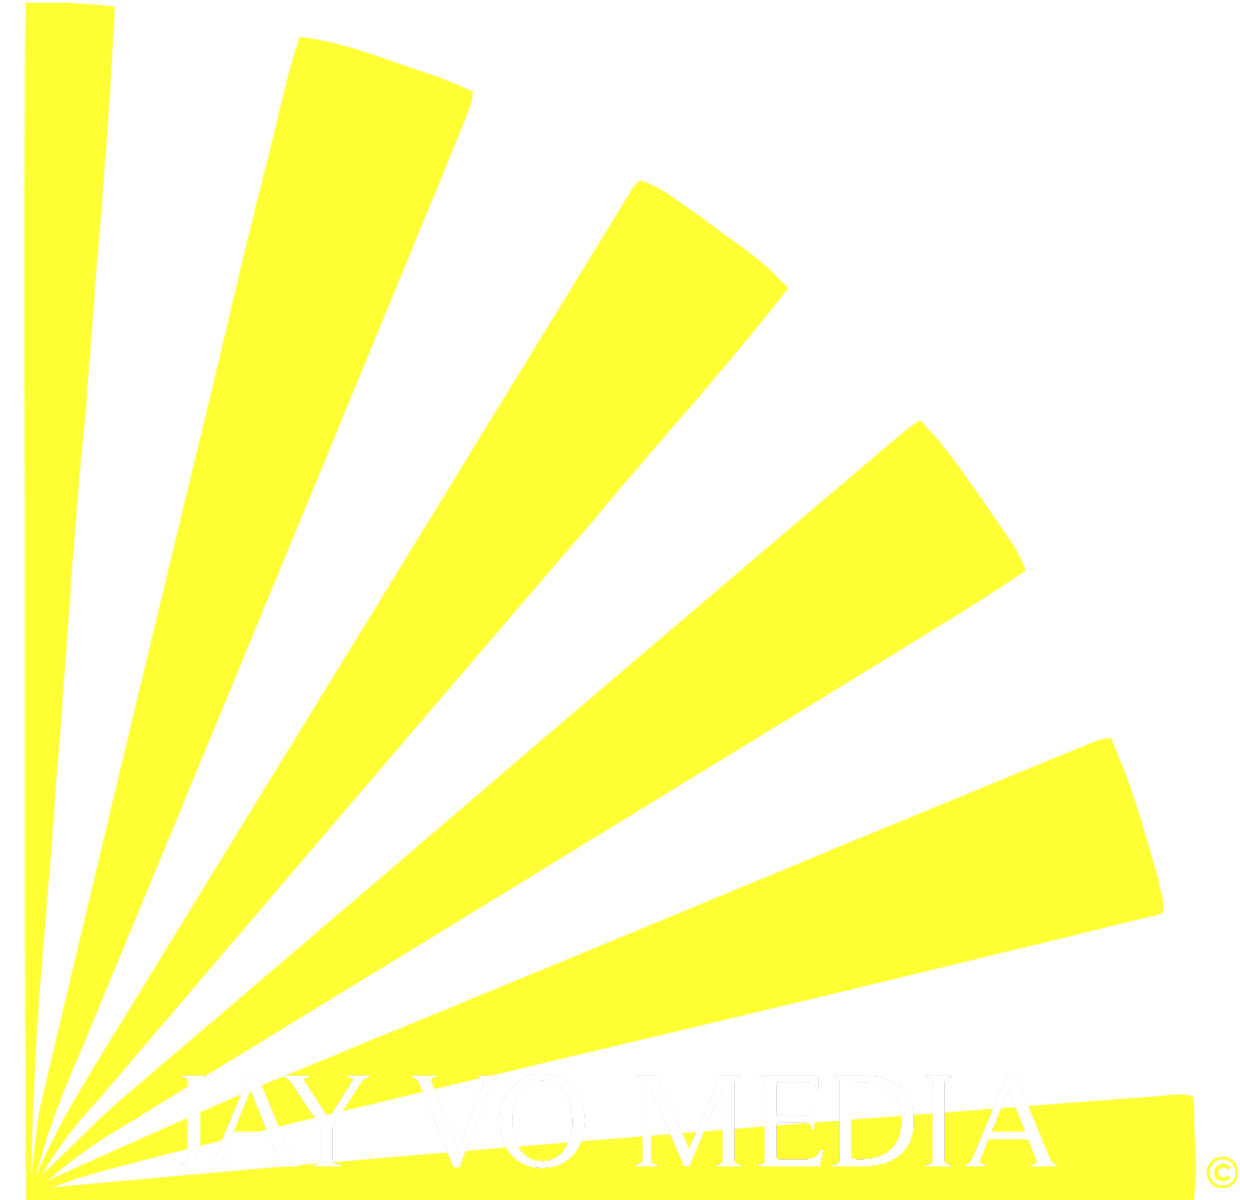 Jay Vo Media